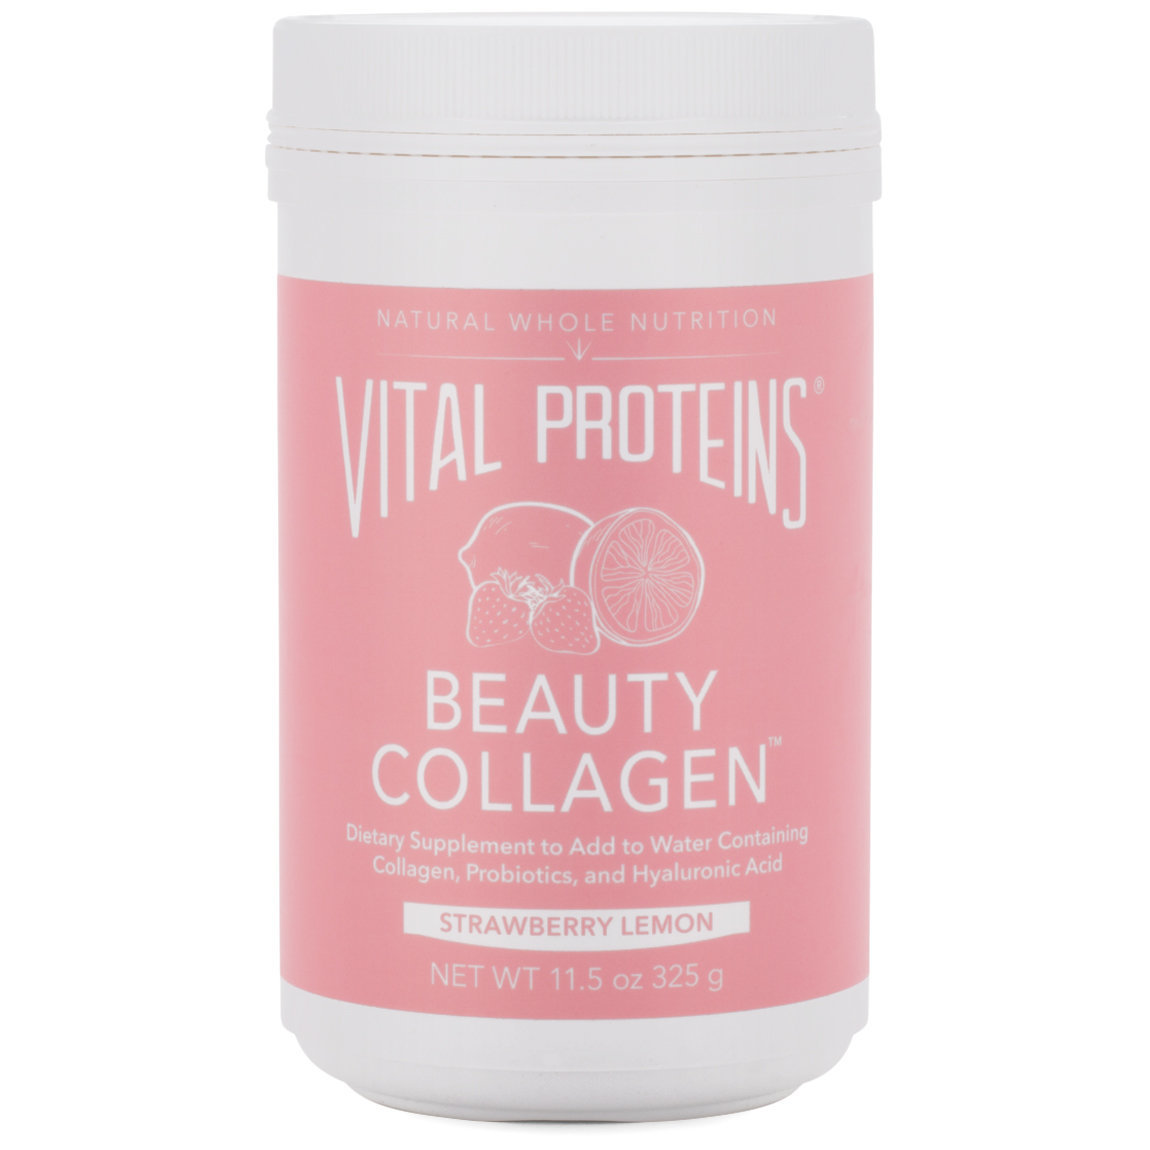 Vital Proteins Beauty Collagen - Strawberry Lemon 11.5 oz | Beautylish1150 x 1150